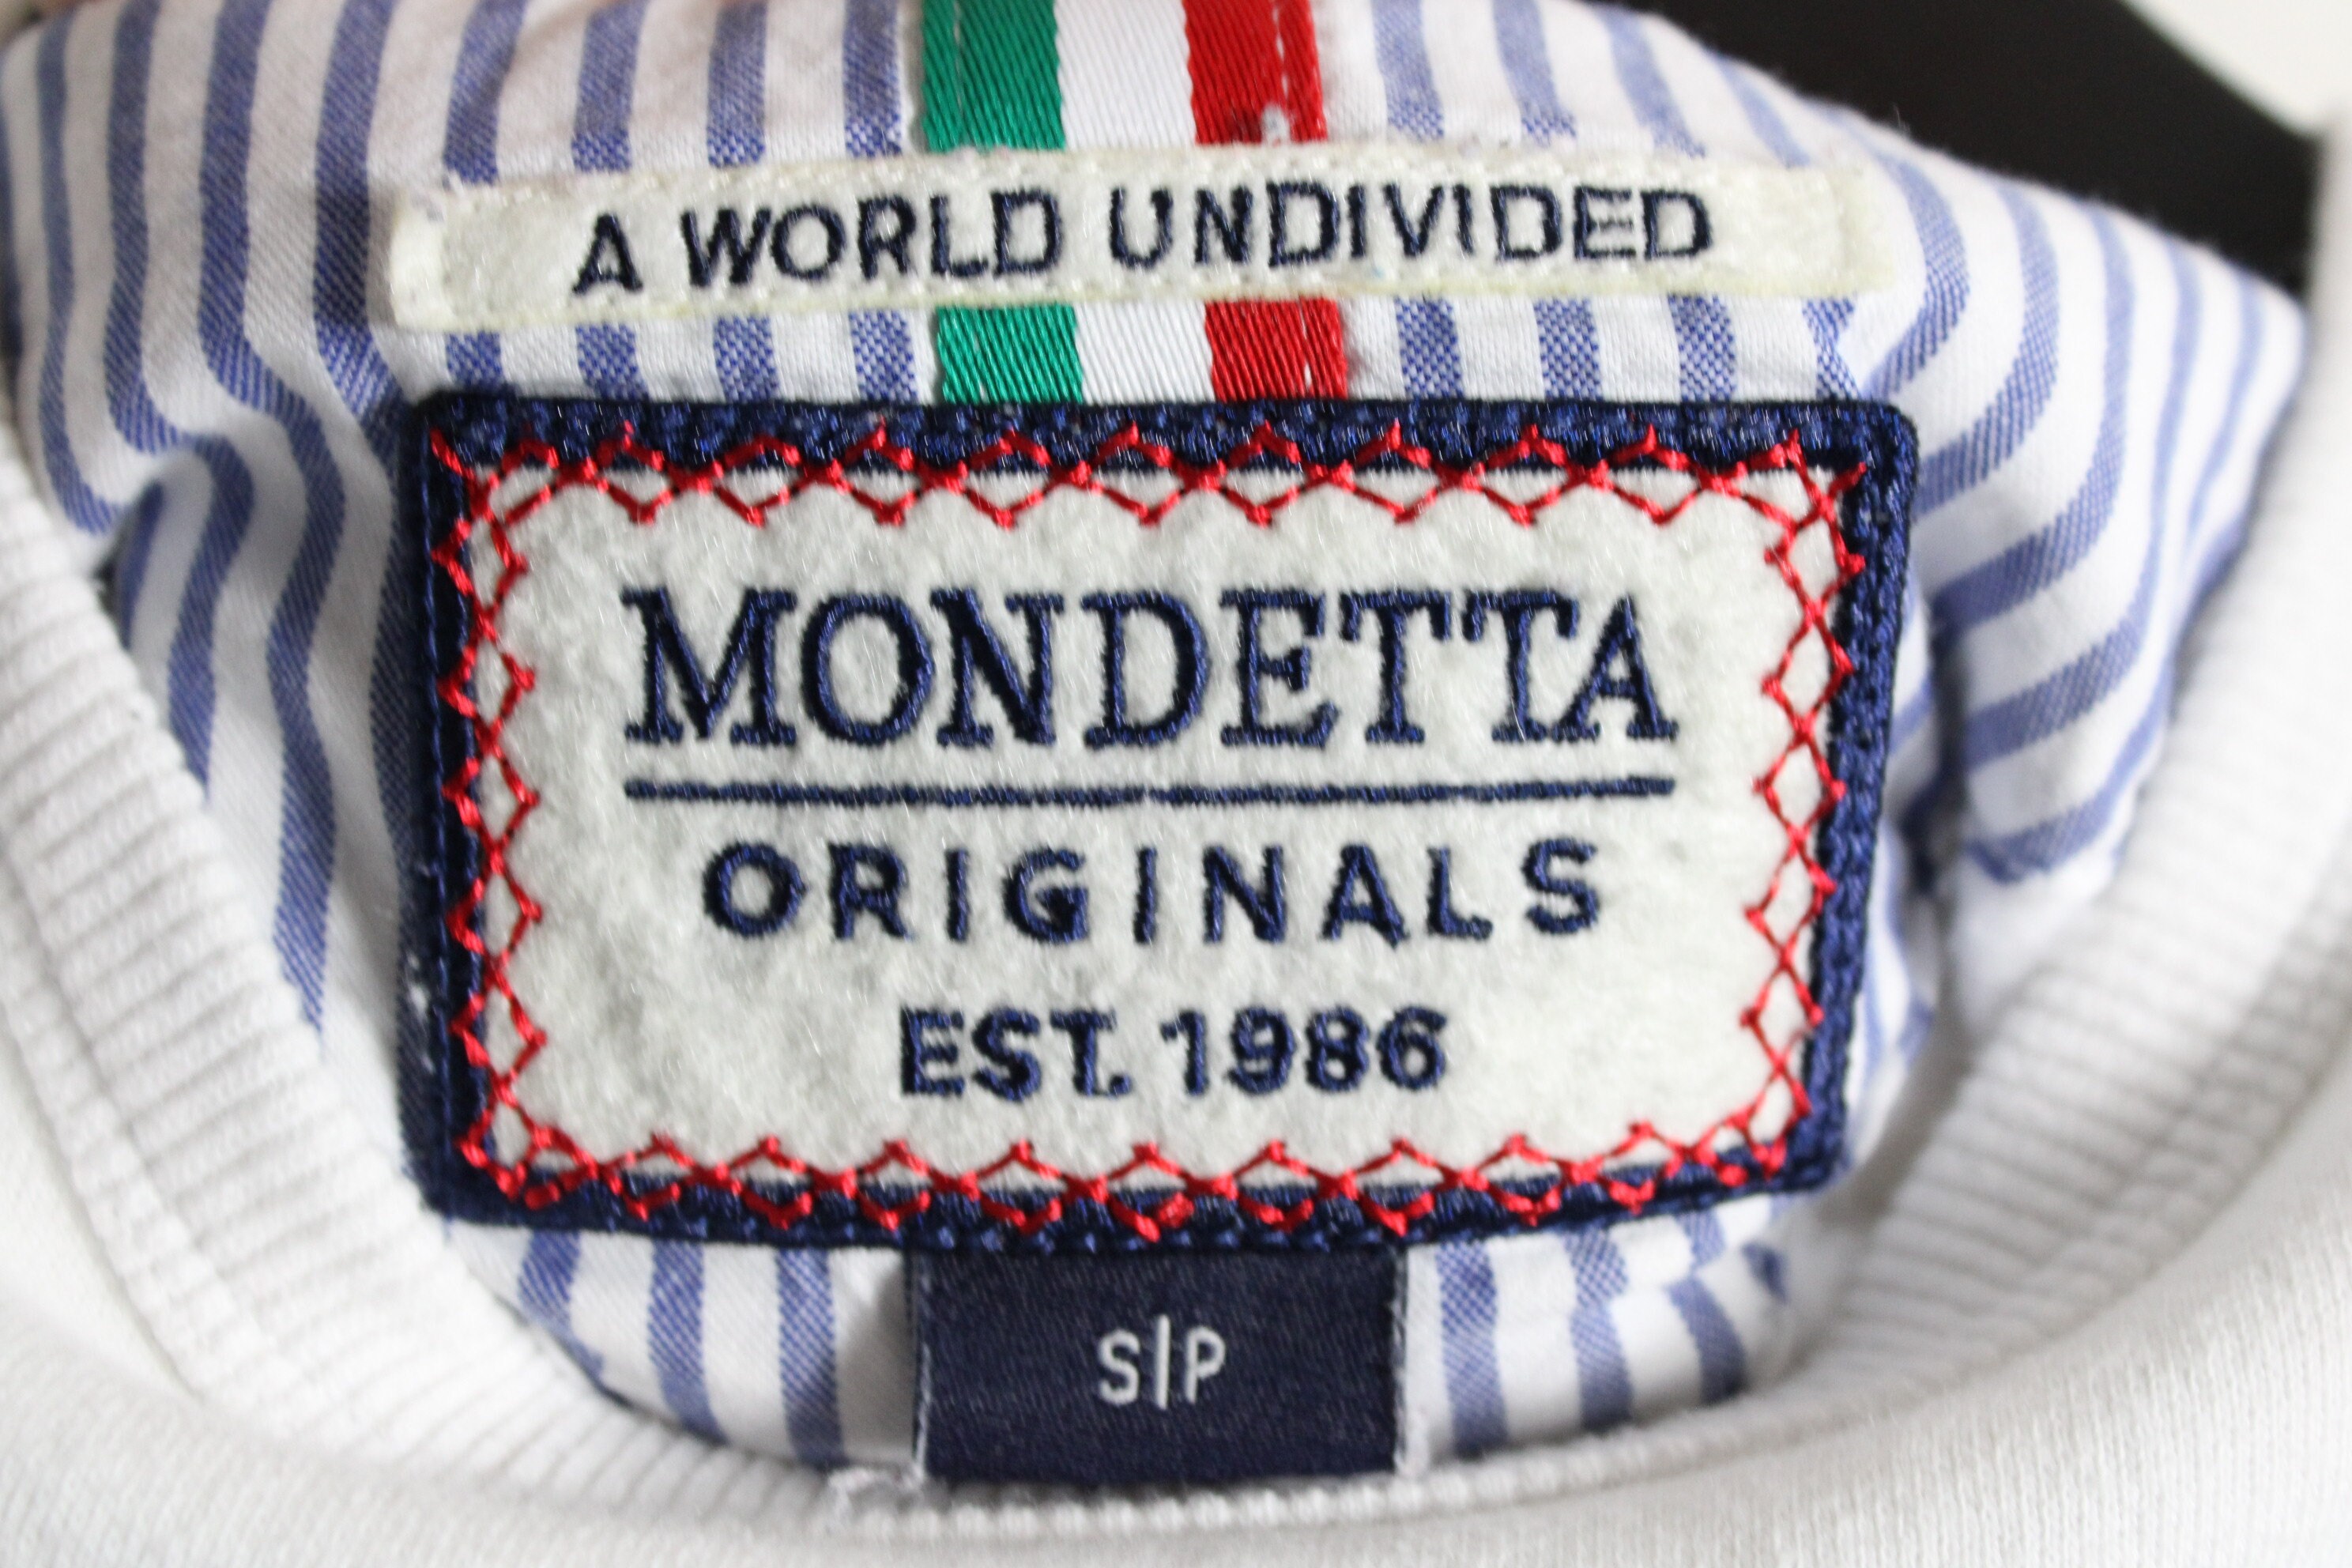 Mondetta Originals